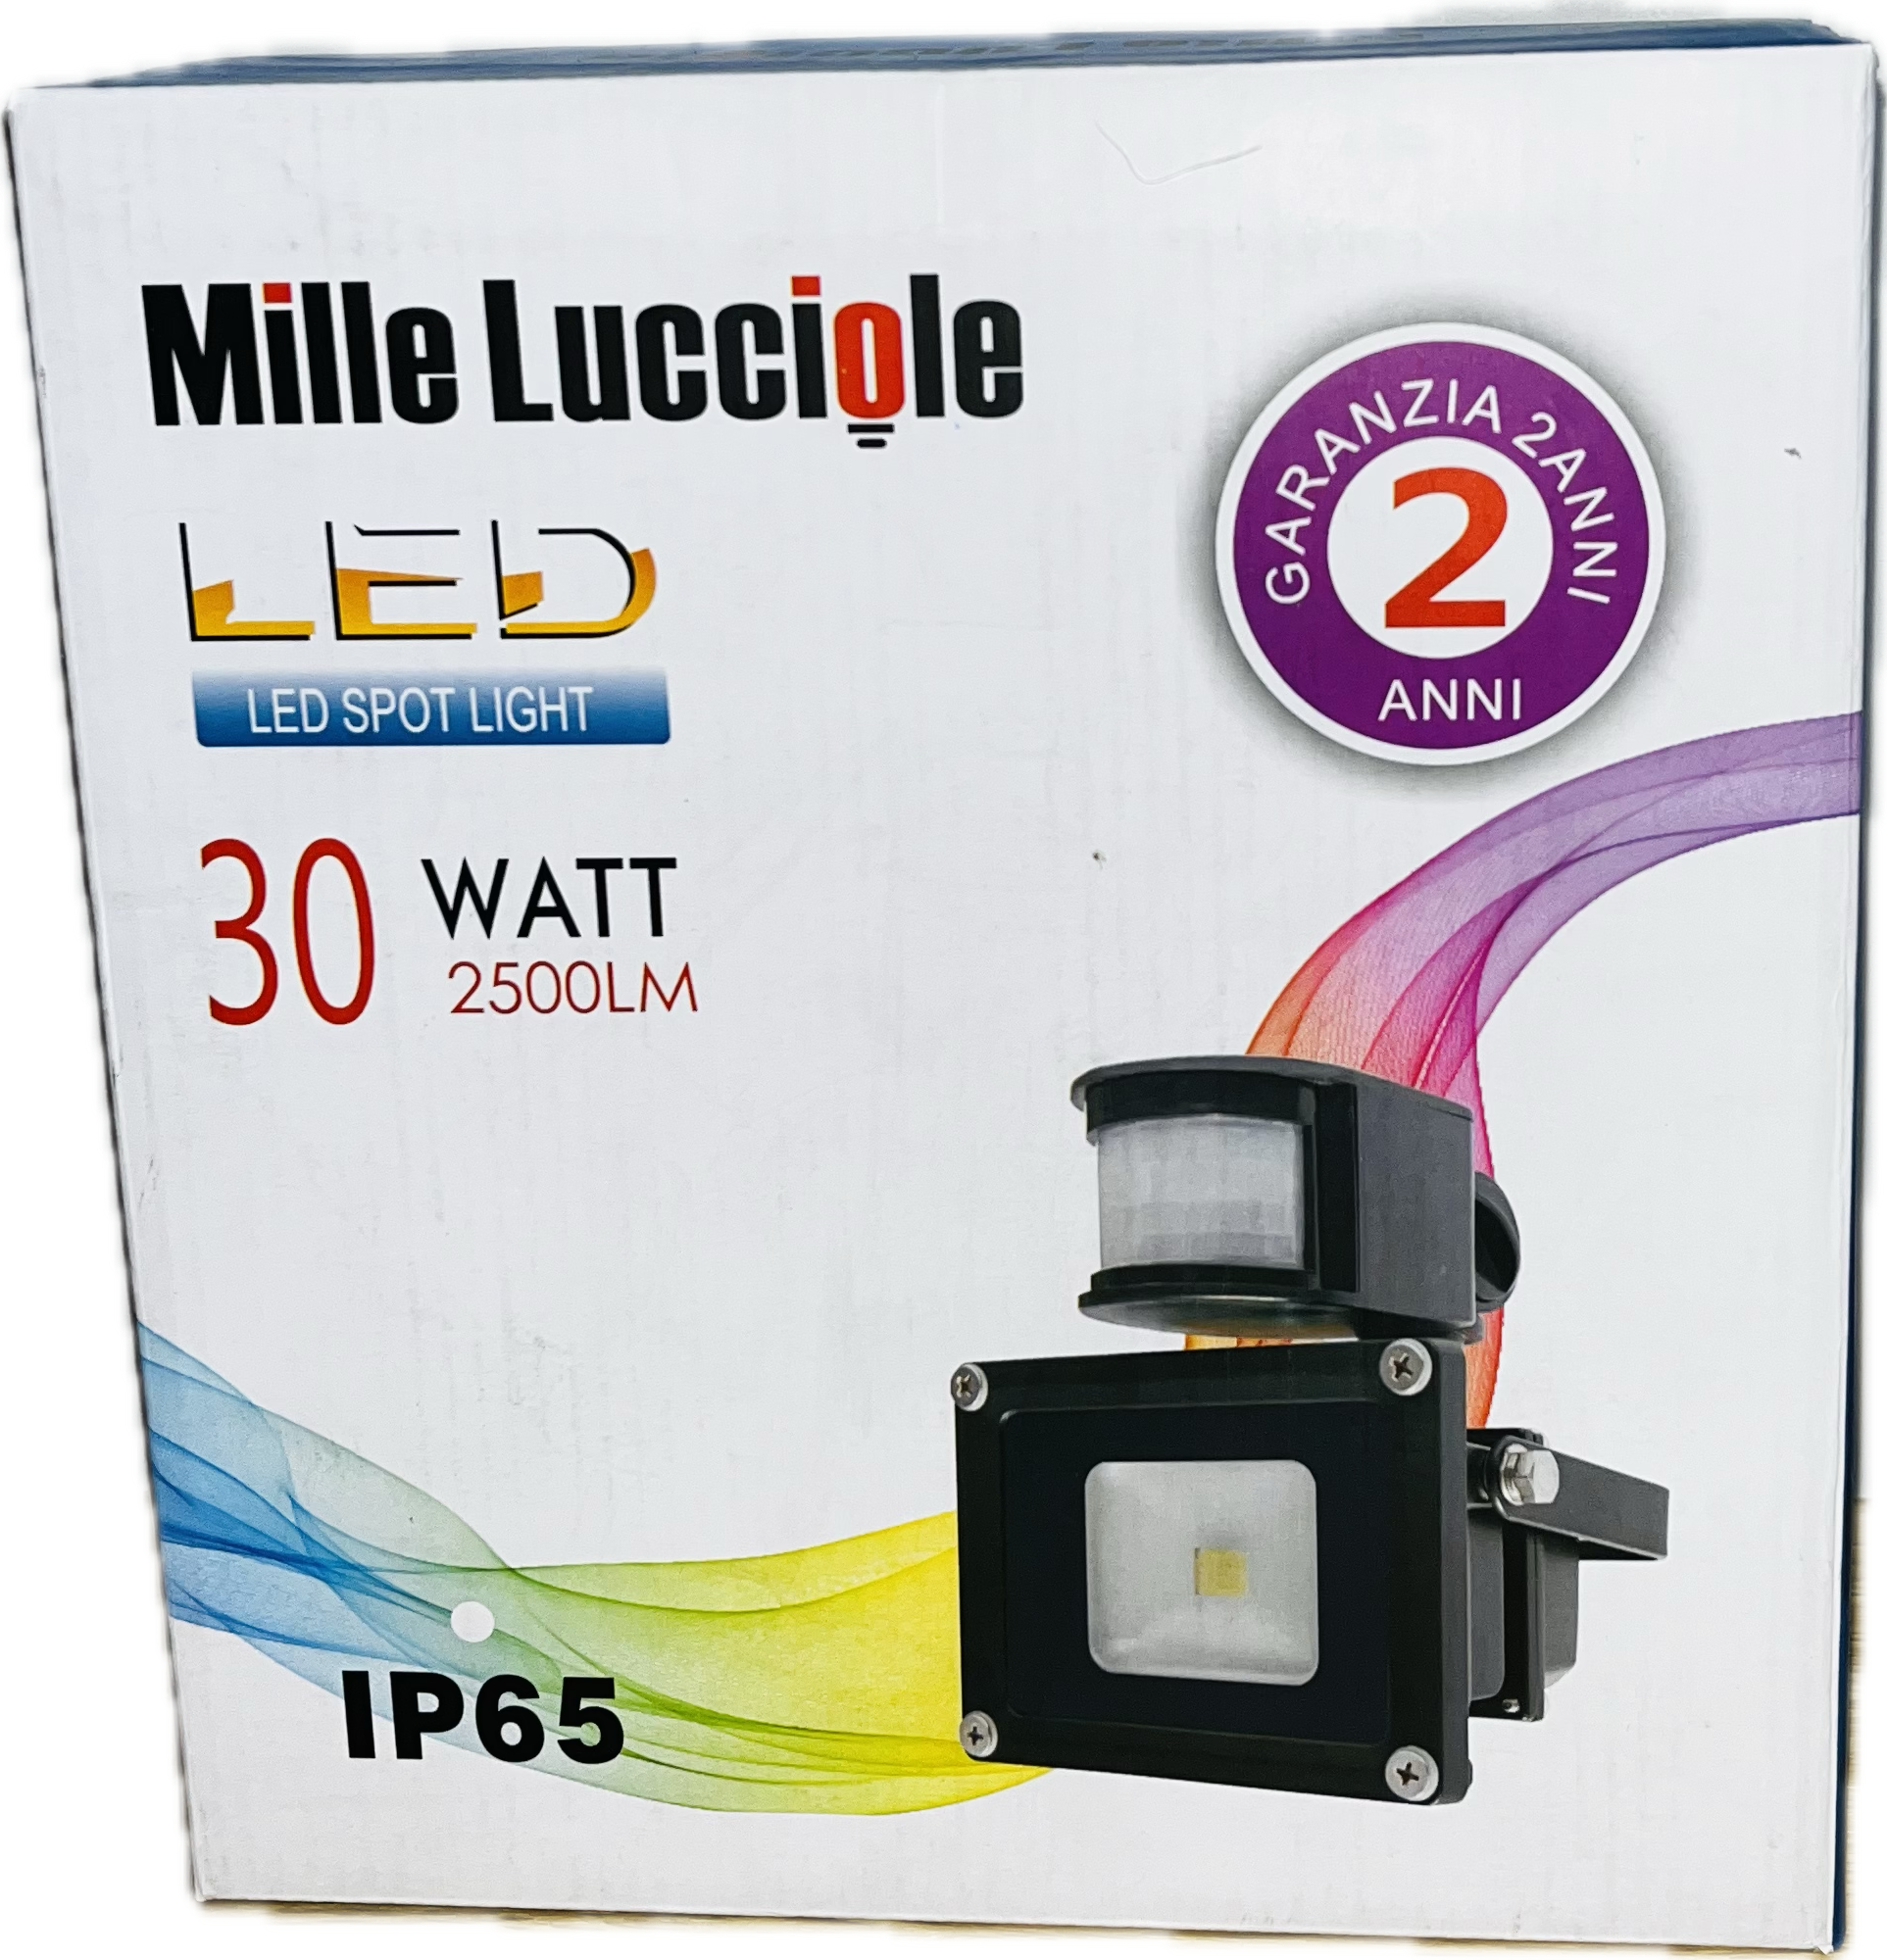 Mille Lucciole LED Spot Light + Sensor 30W